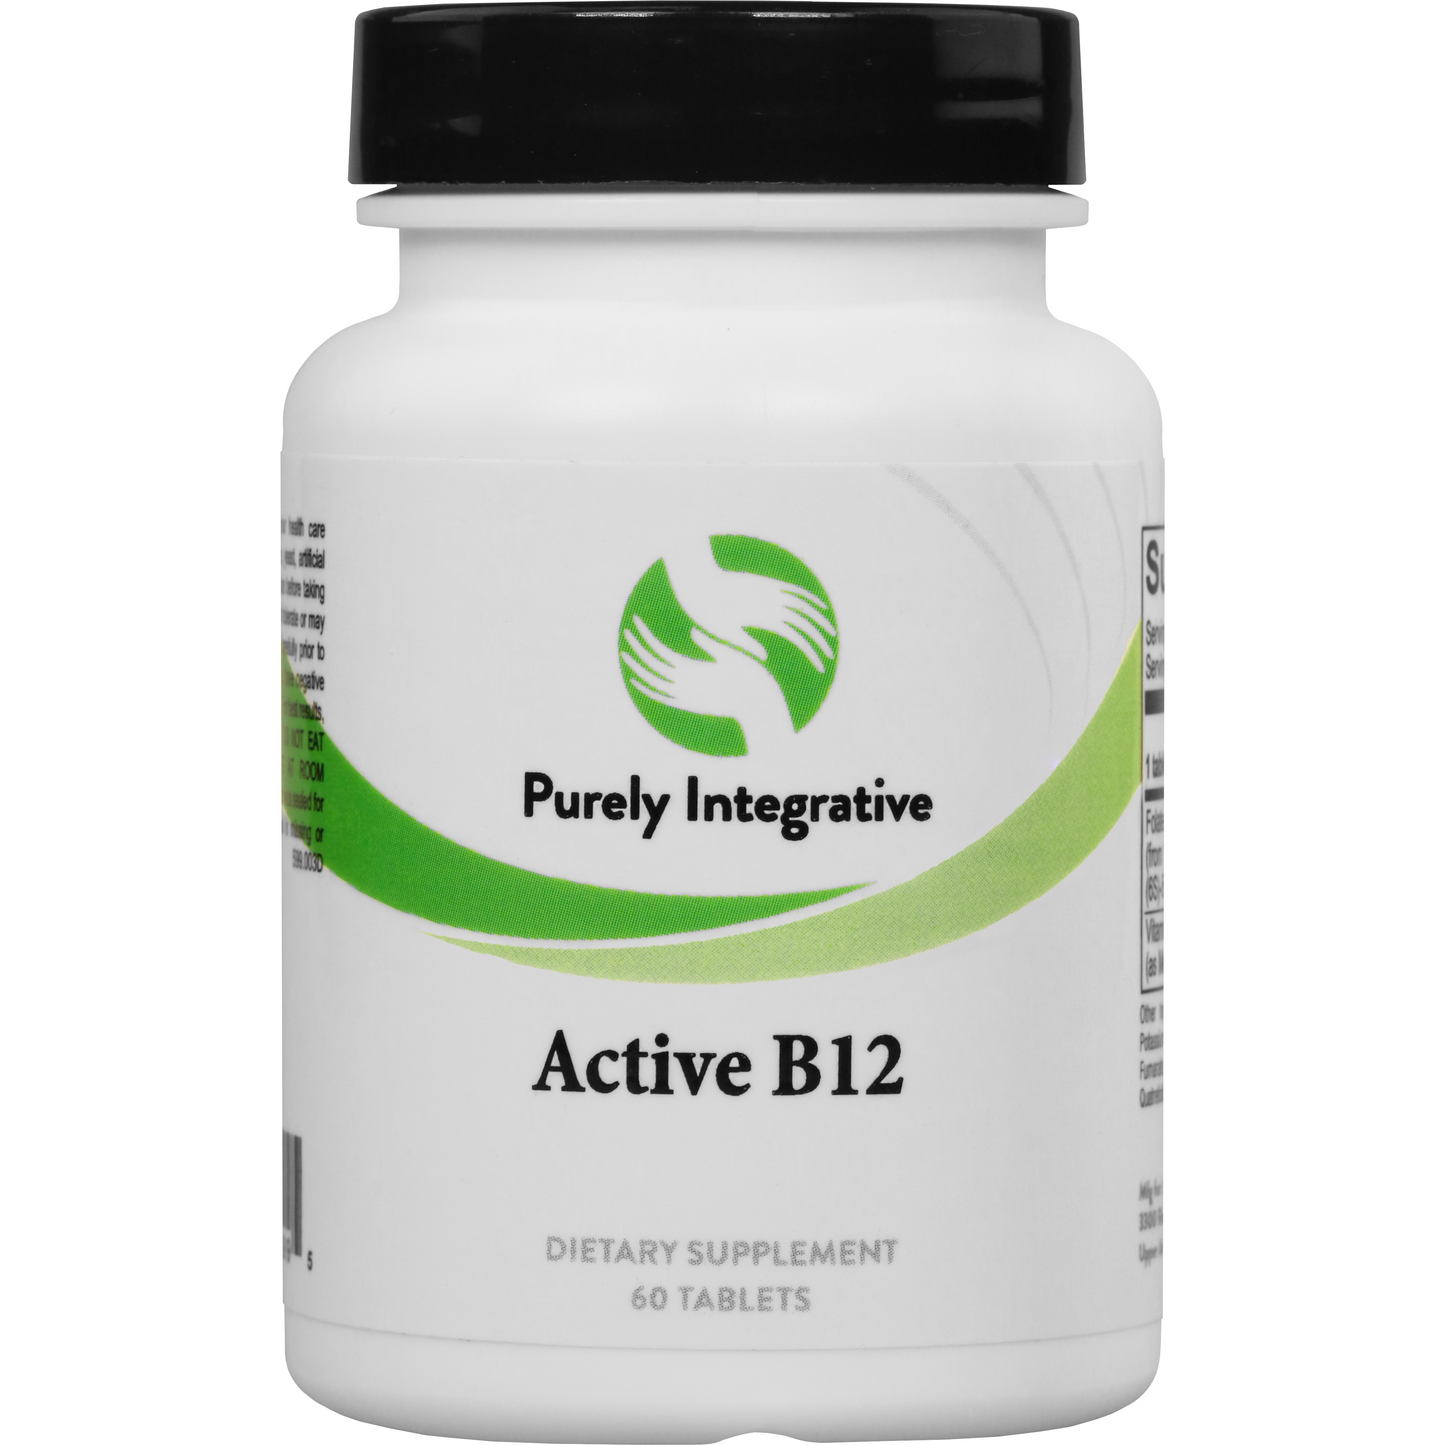 Active B12